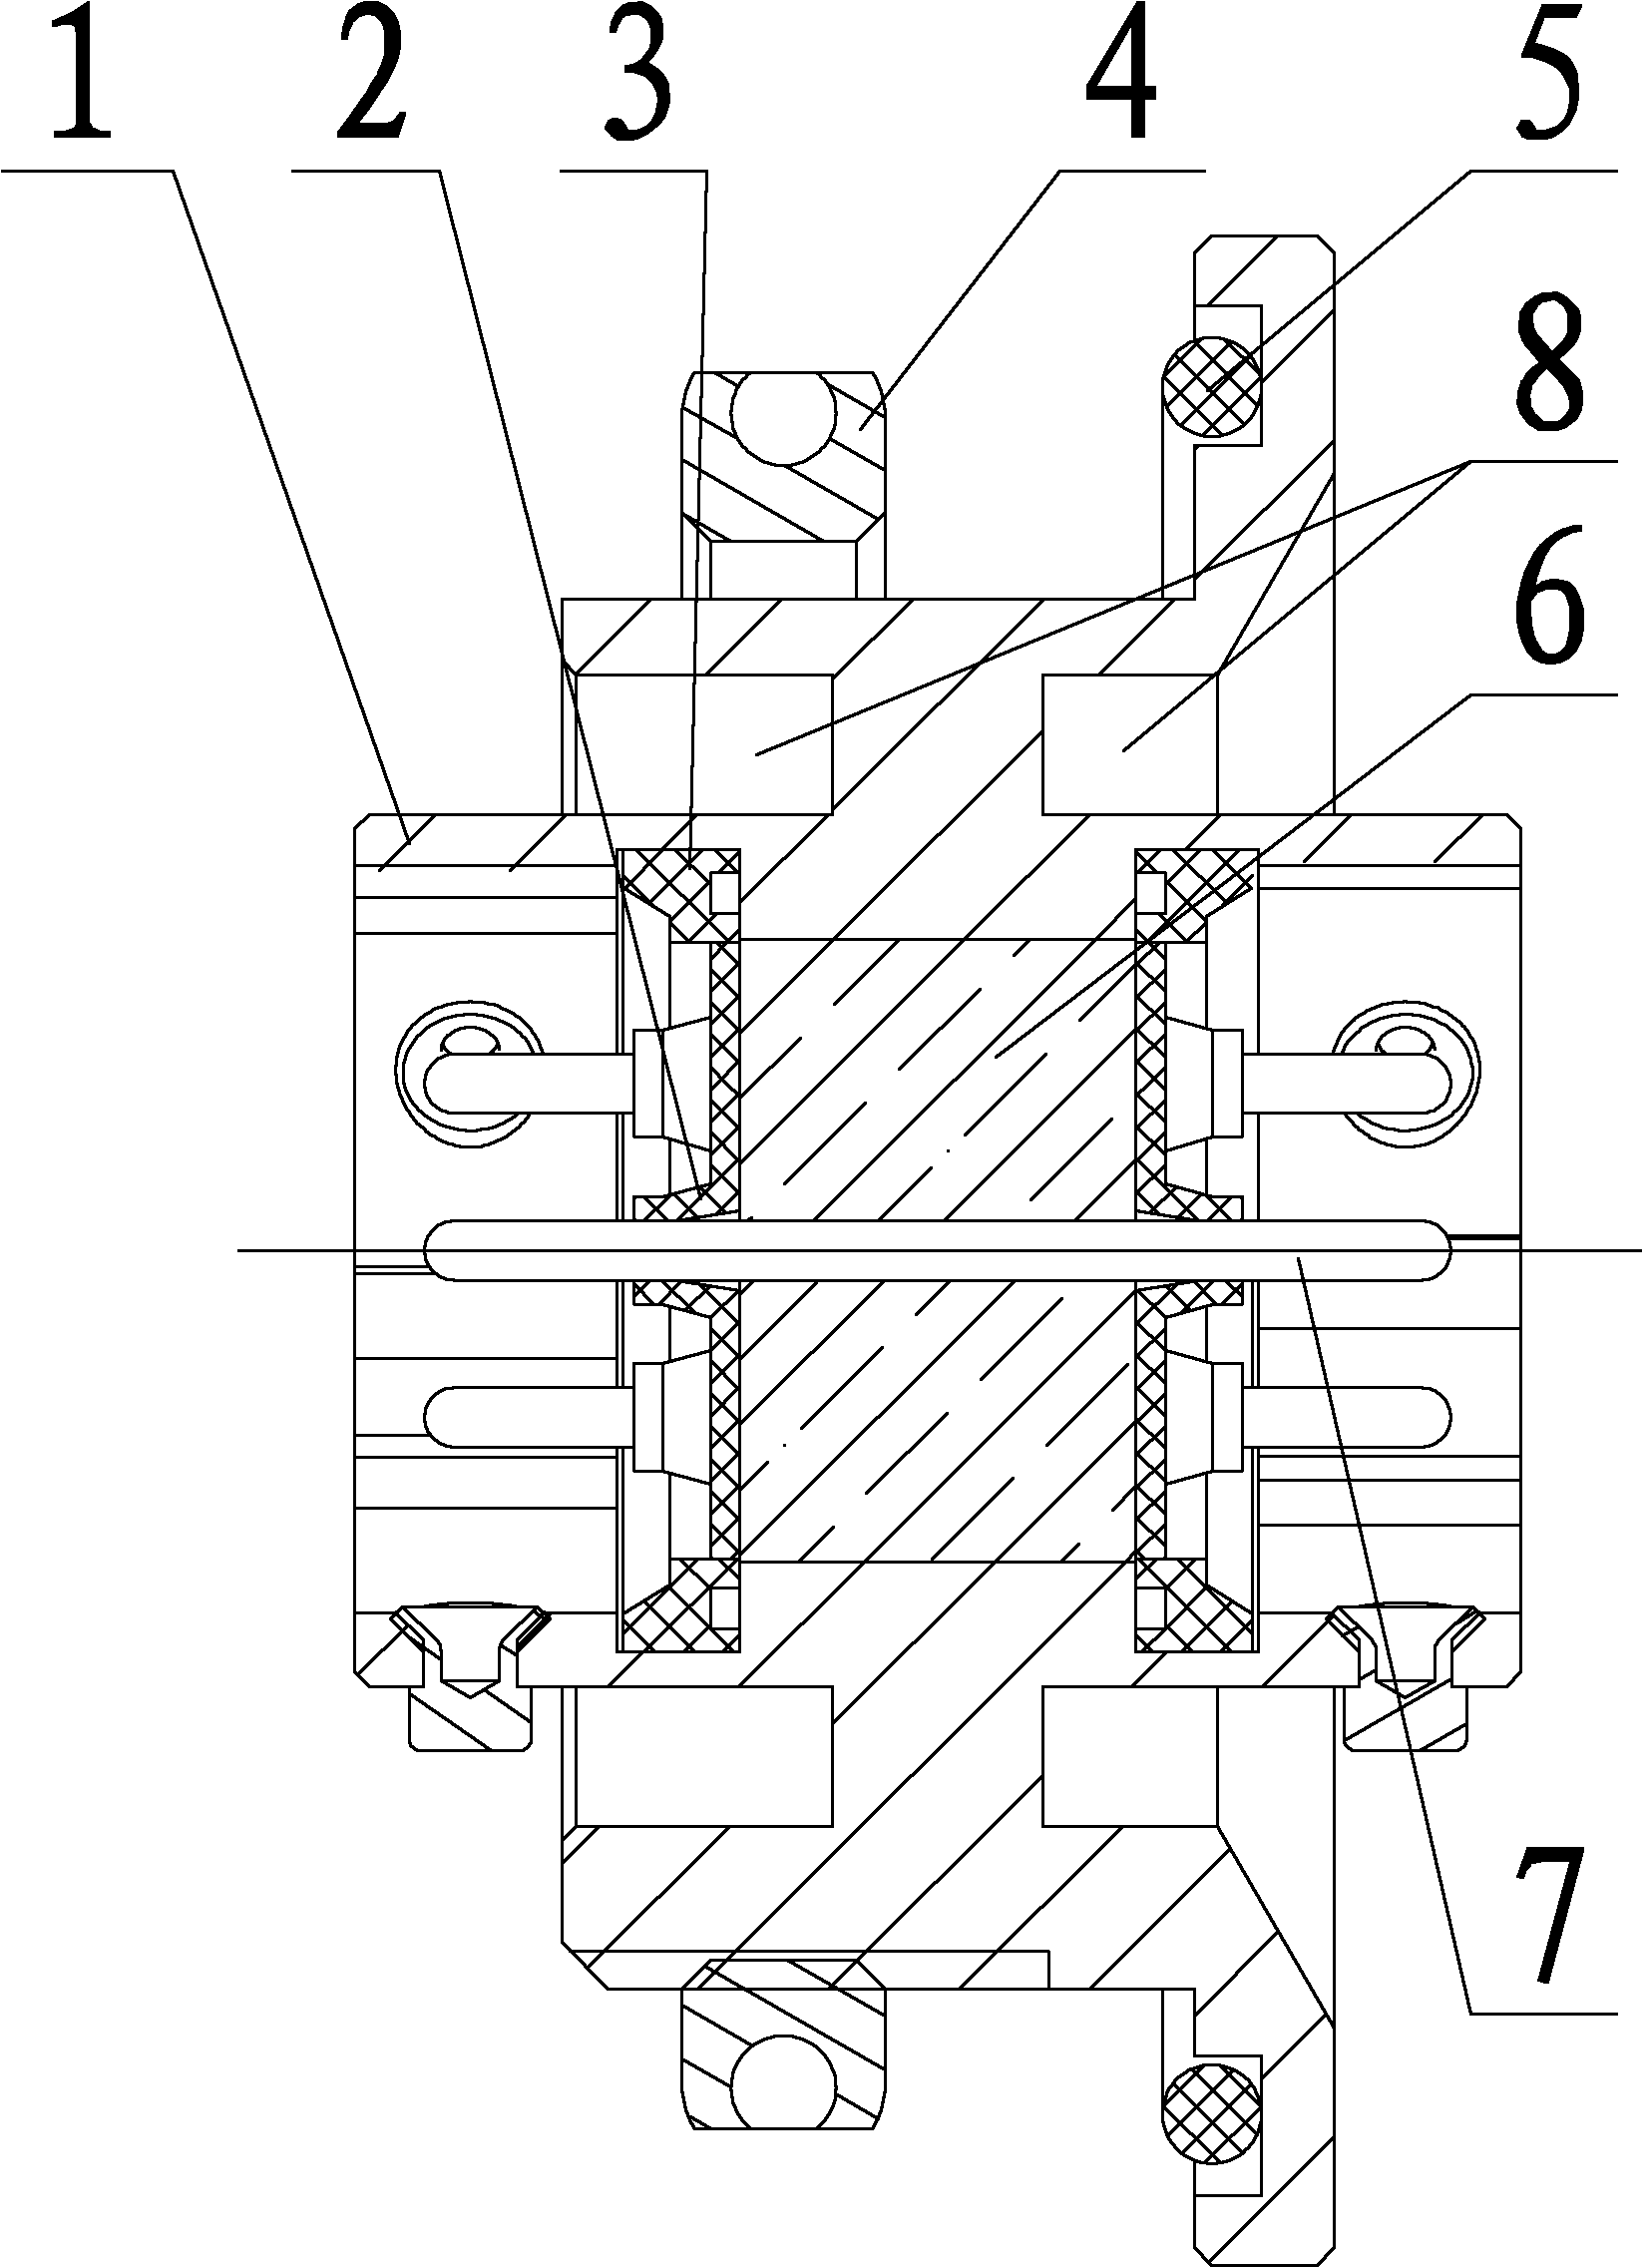 Through-wall air-tight seal electric connector